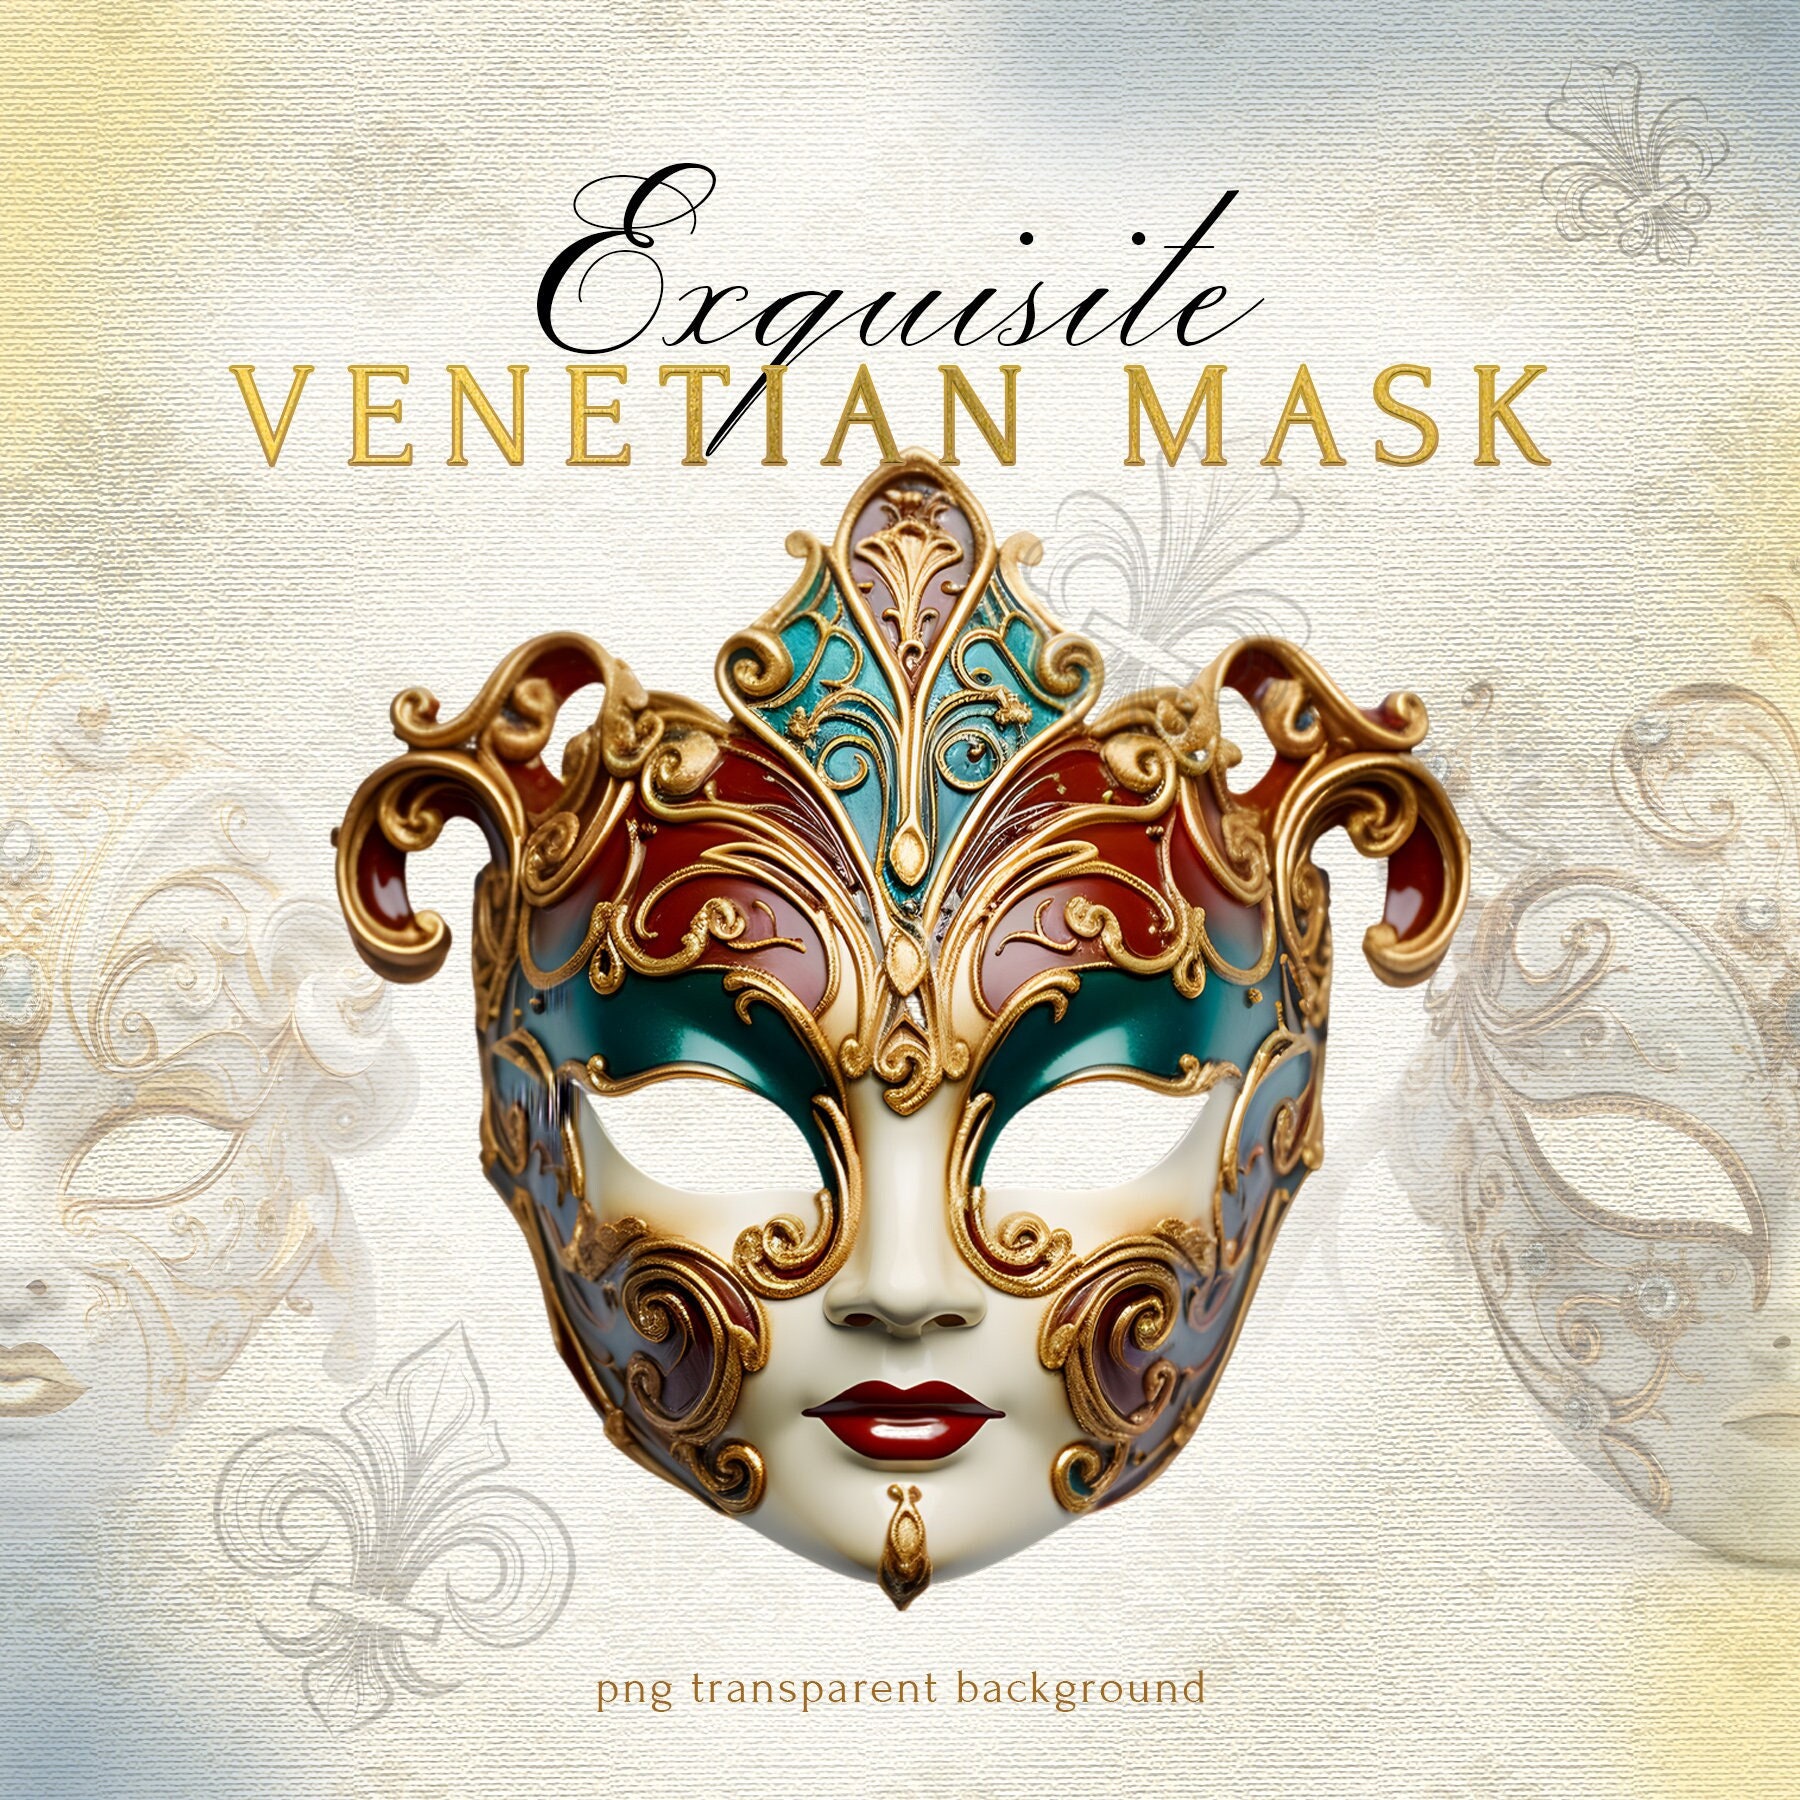 Luxury Mask – Antique Look Venetian Party Mask for Men & Women